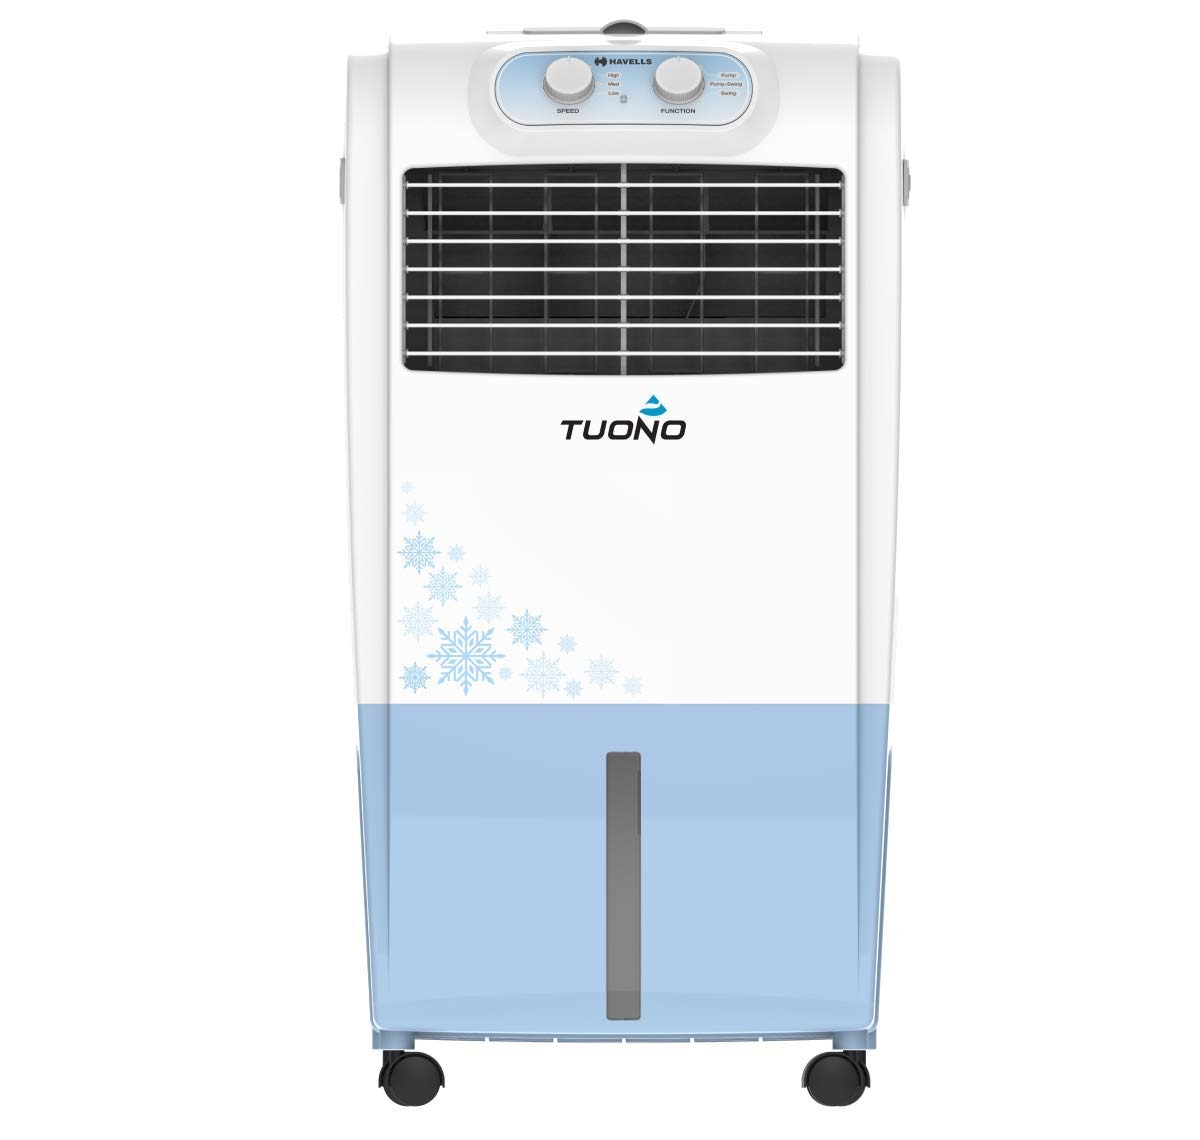 Amazon Deal: सिर्फ 5 हजार रुपये में खरीद कर रख लीजिये ये बेस्ट सेलिंग Indoor Cooler